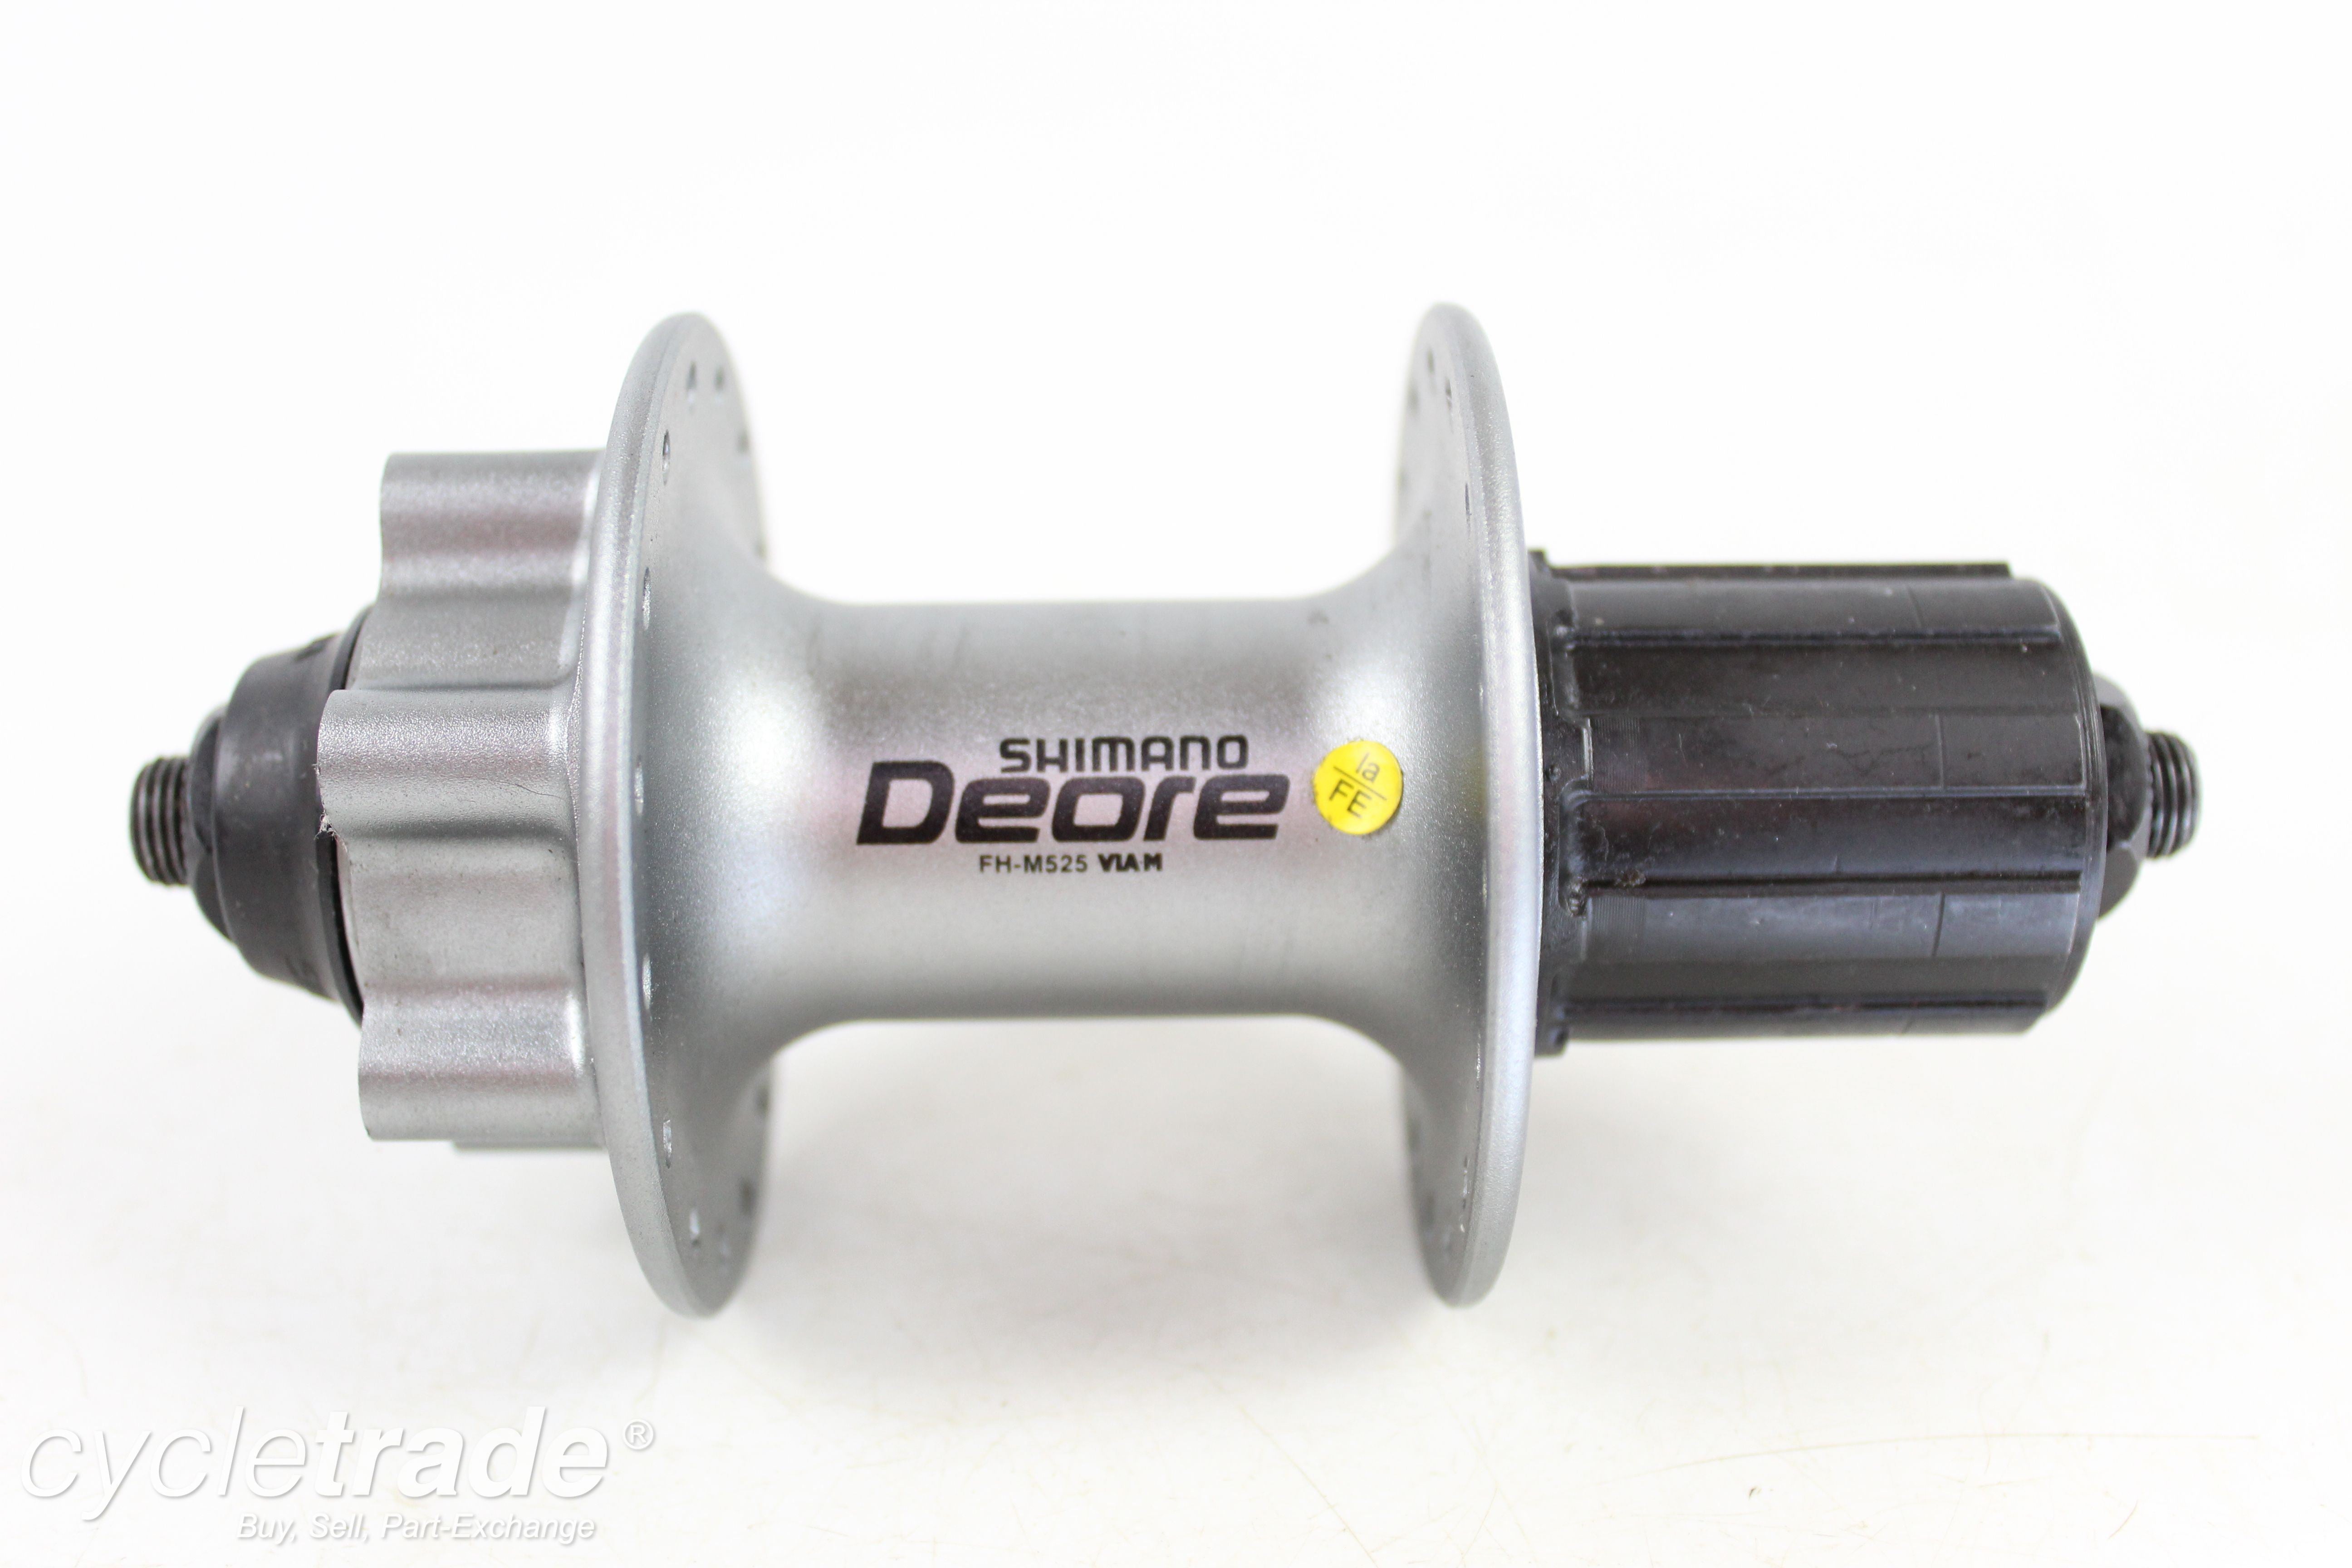 Rear Hub - Shimano Deore, FH-M525, 10 Speed - Grade B+